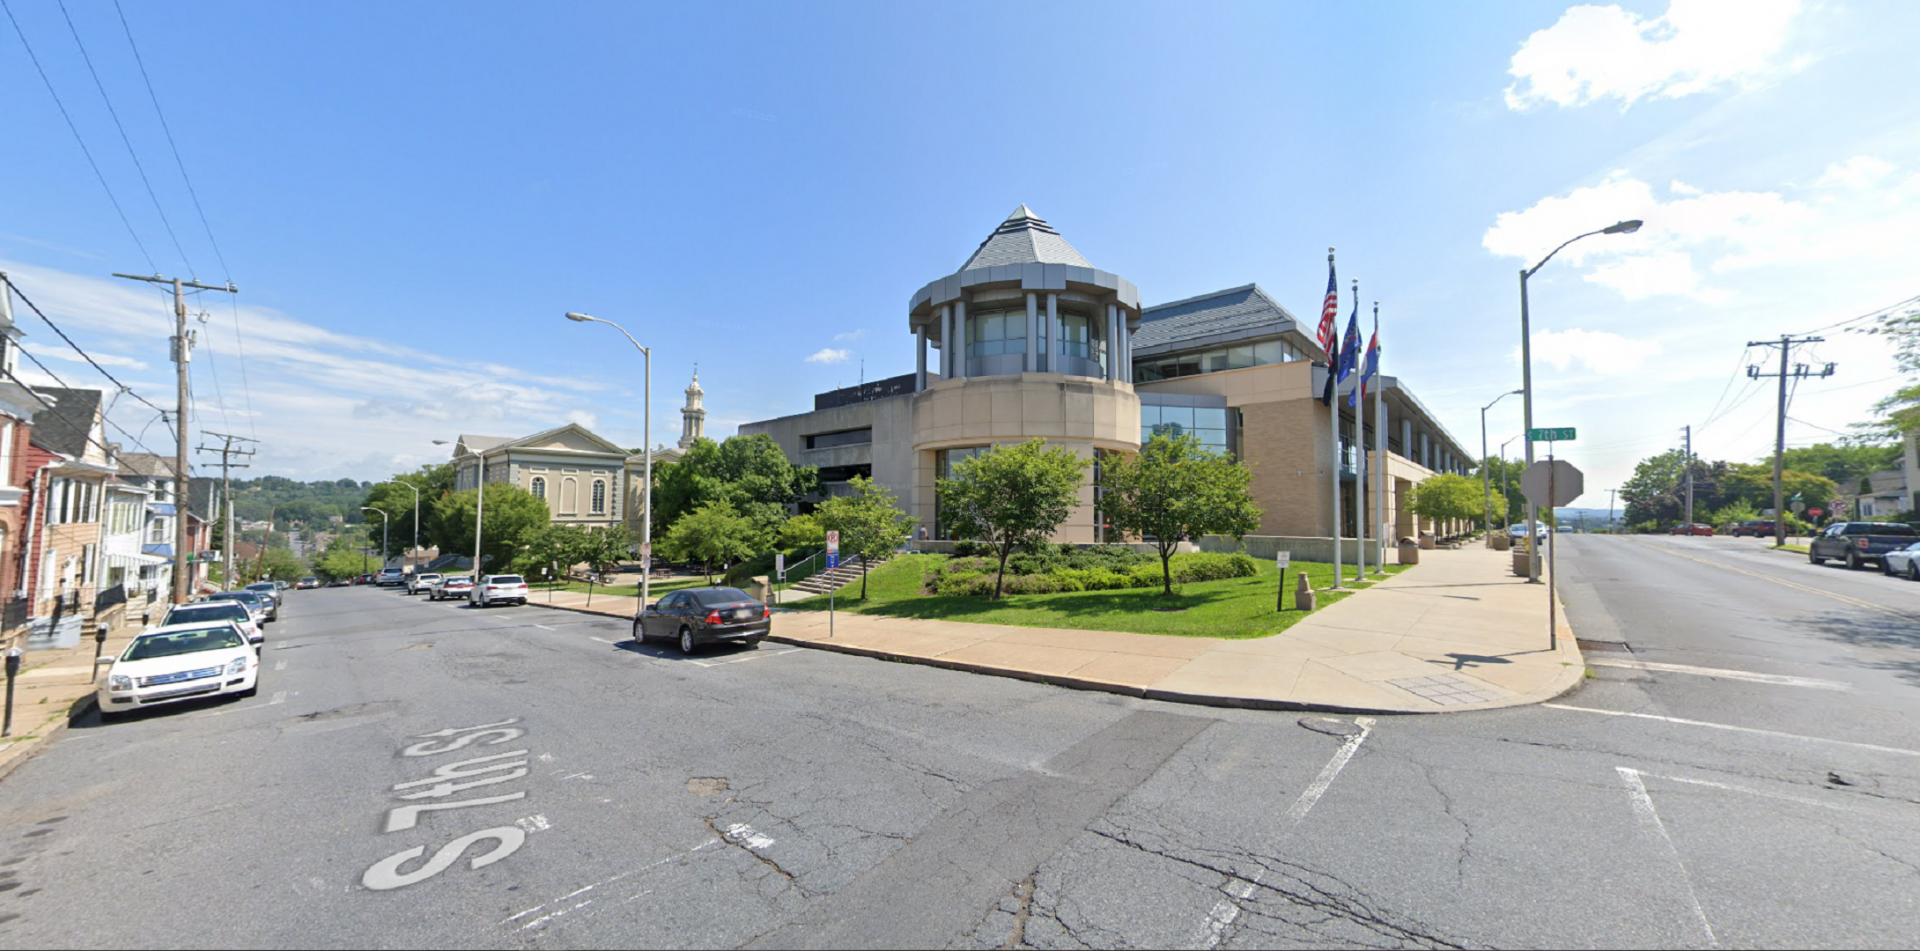 Northampton County Courthouse in Easton, Pa.